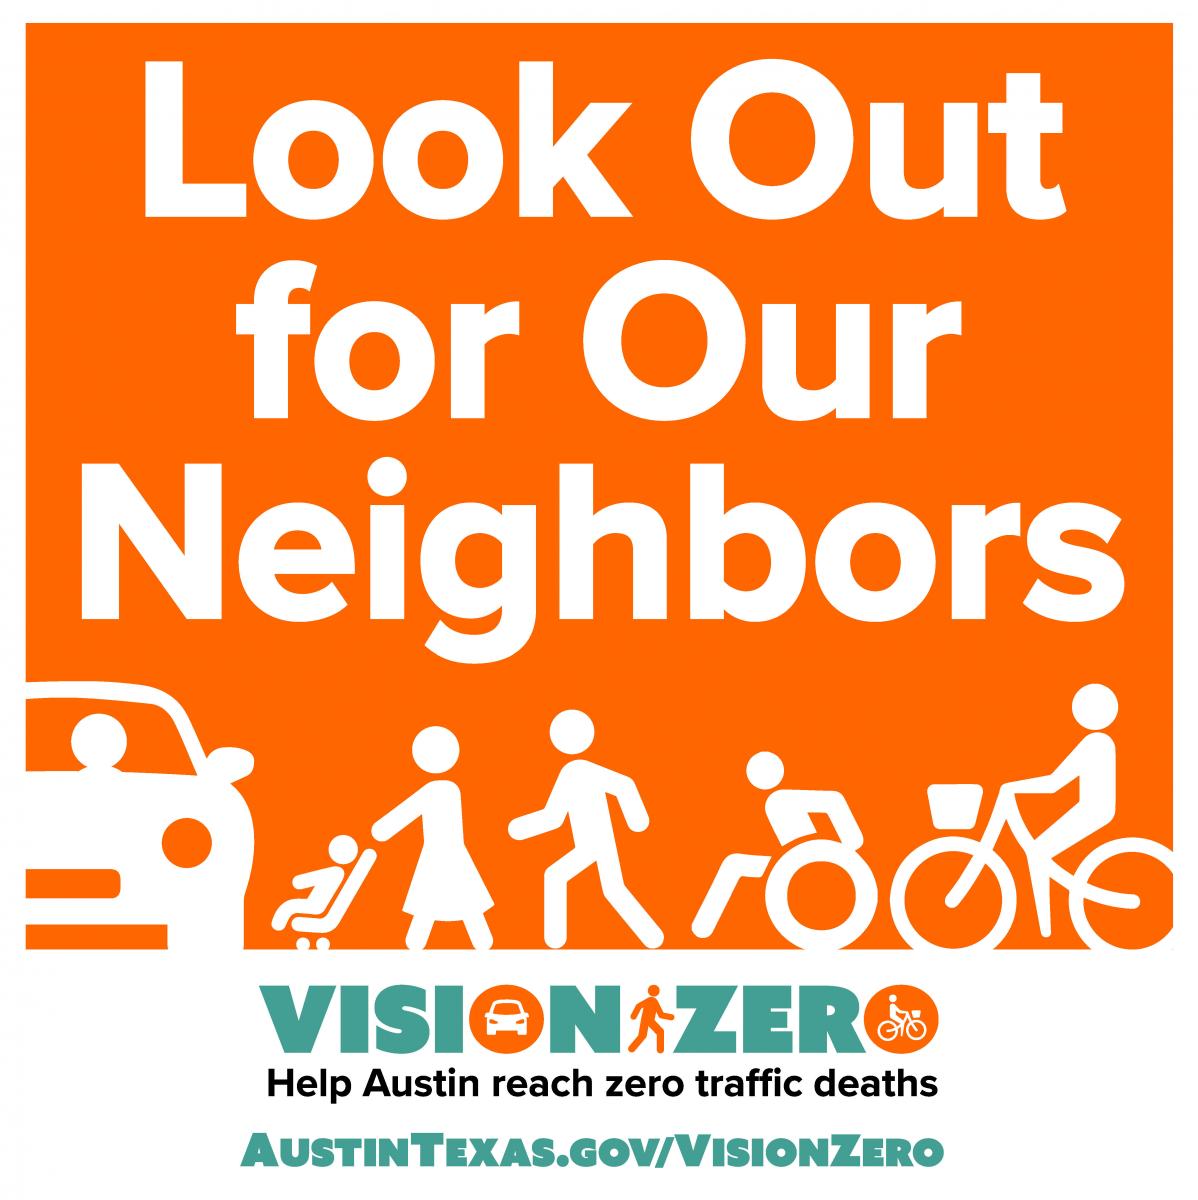 Look out for our neighbors. Vision Zero. Help Austin Reach Zero Traffic Deaths. AustinTexas,gov/VisionZero.